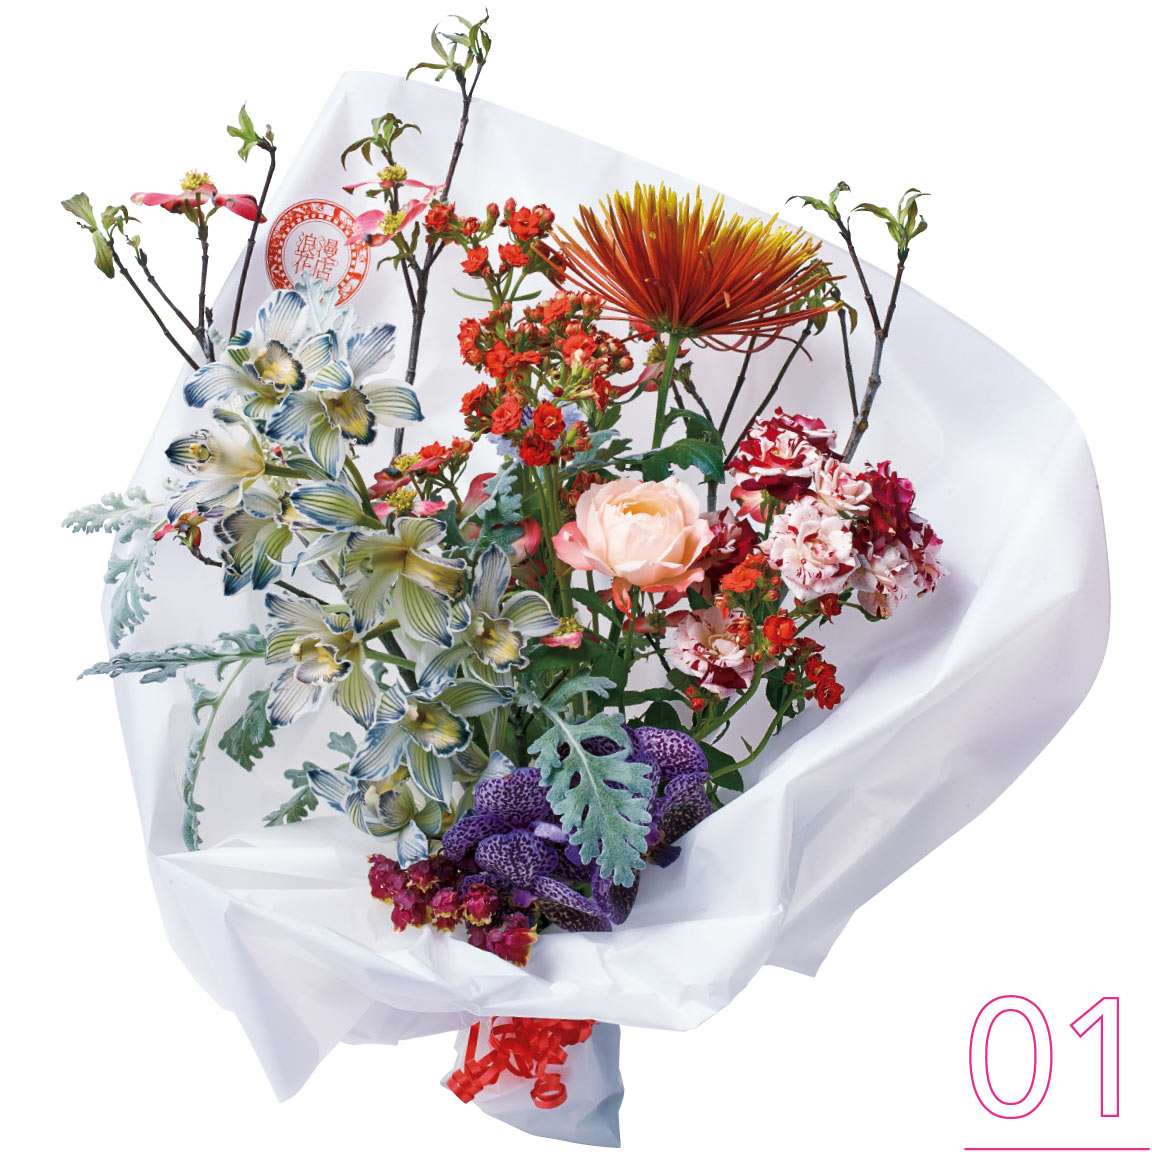 FLOWER SHOP & BOUQUET GUIDE 2021 花束を贈ろう。 Special Contents 